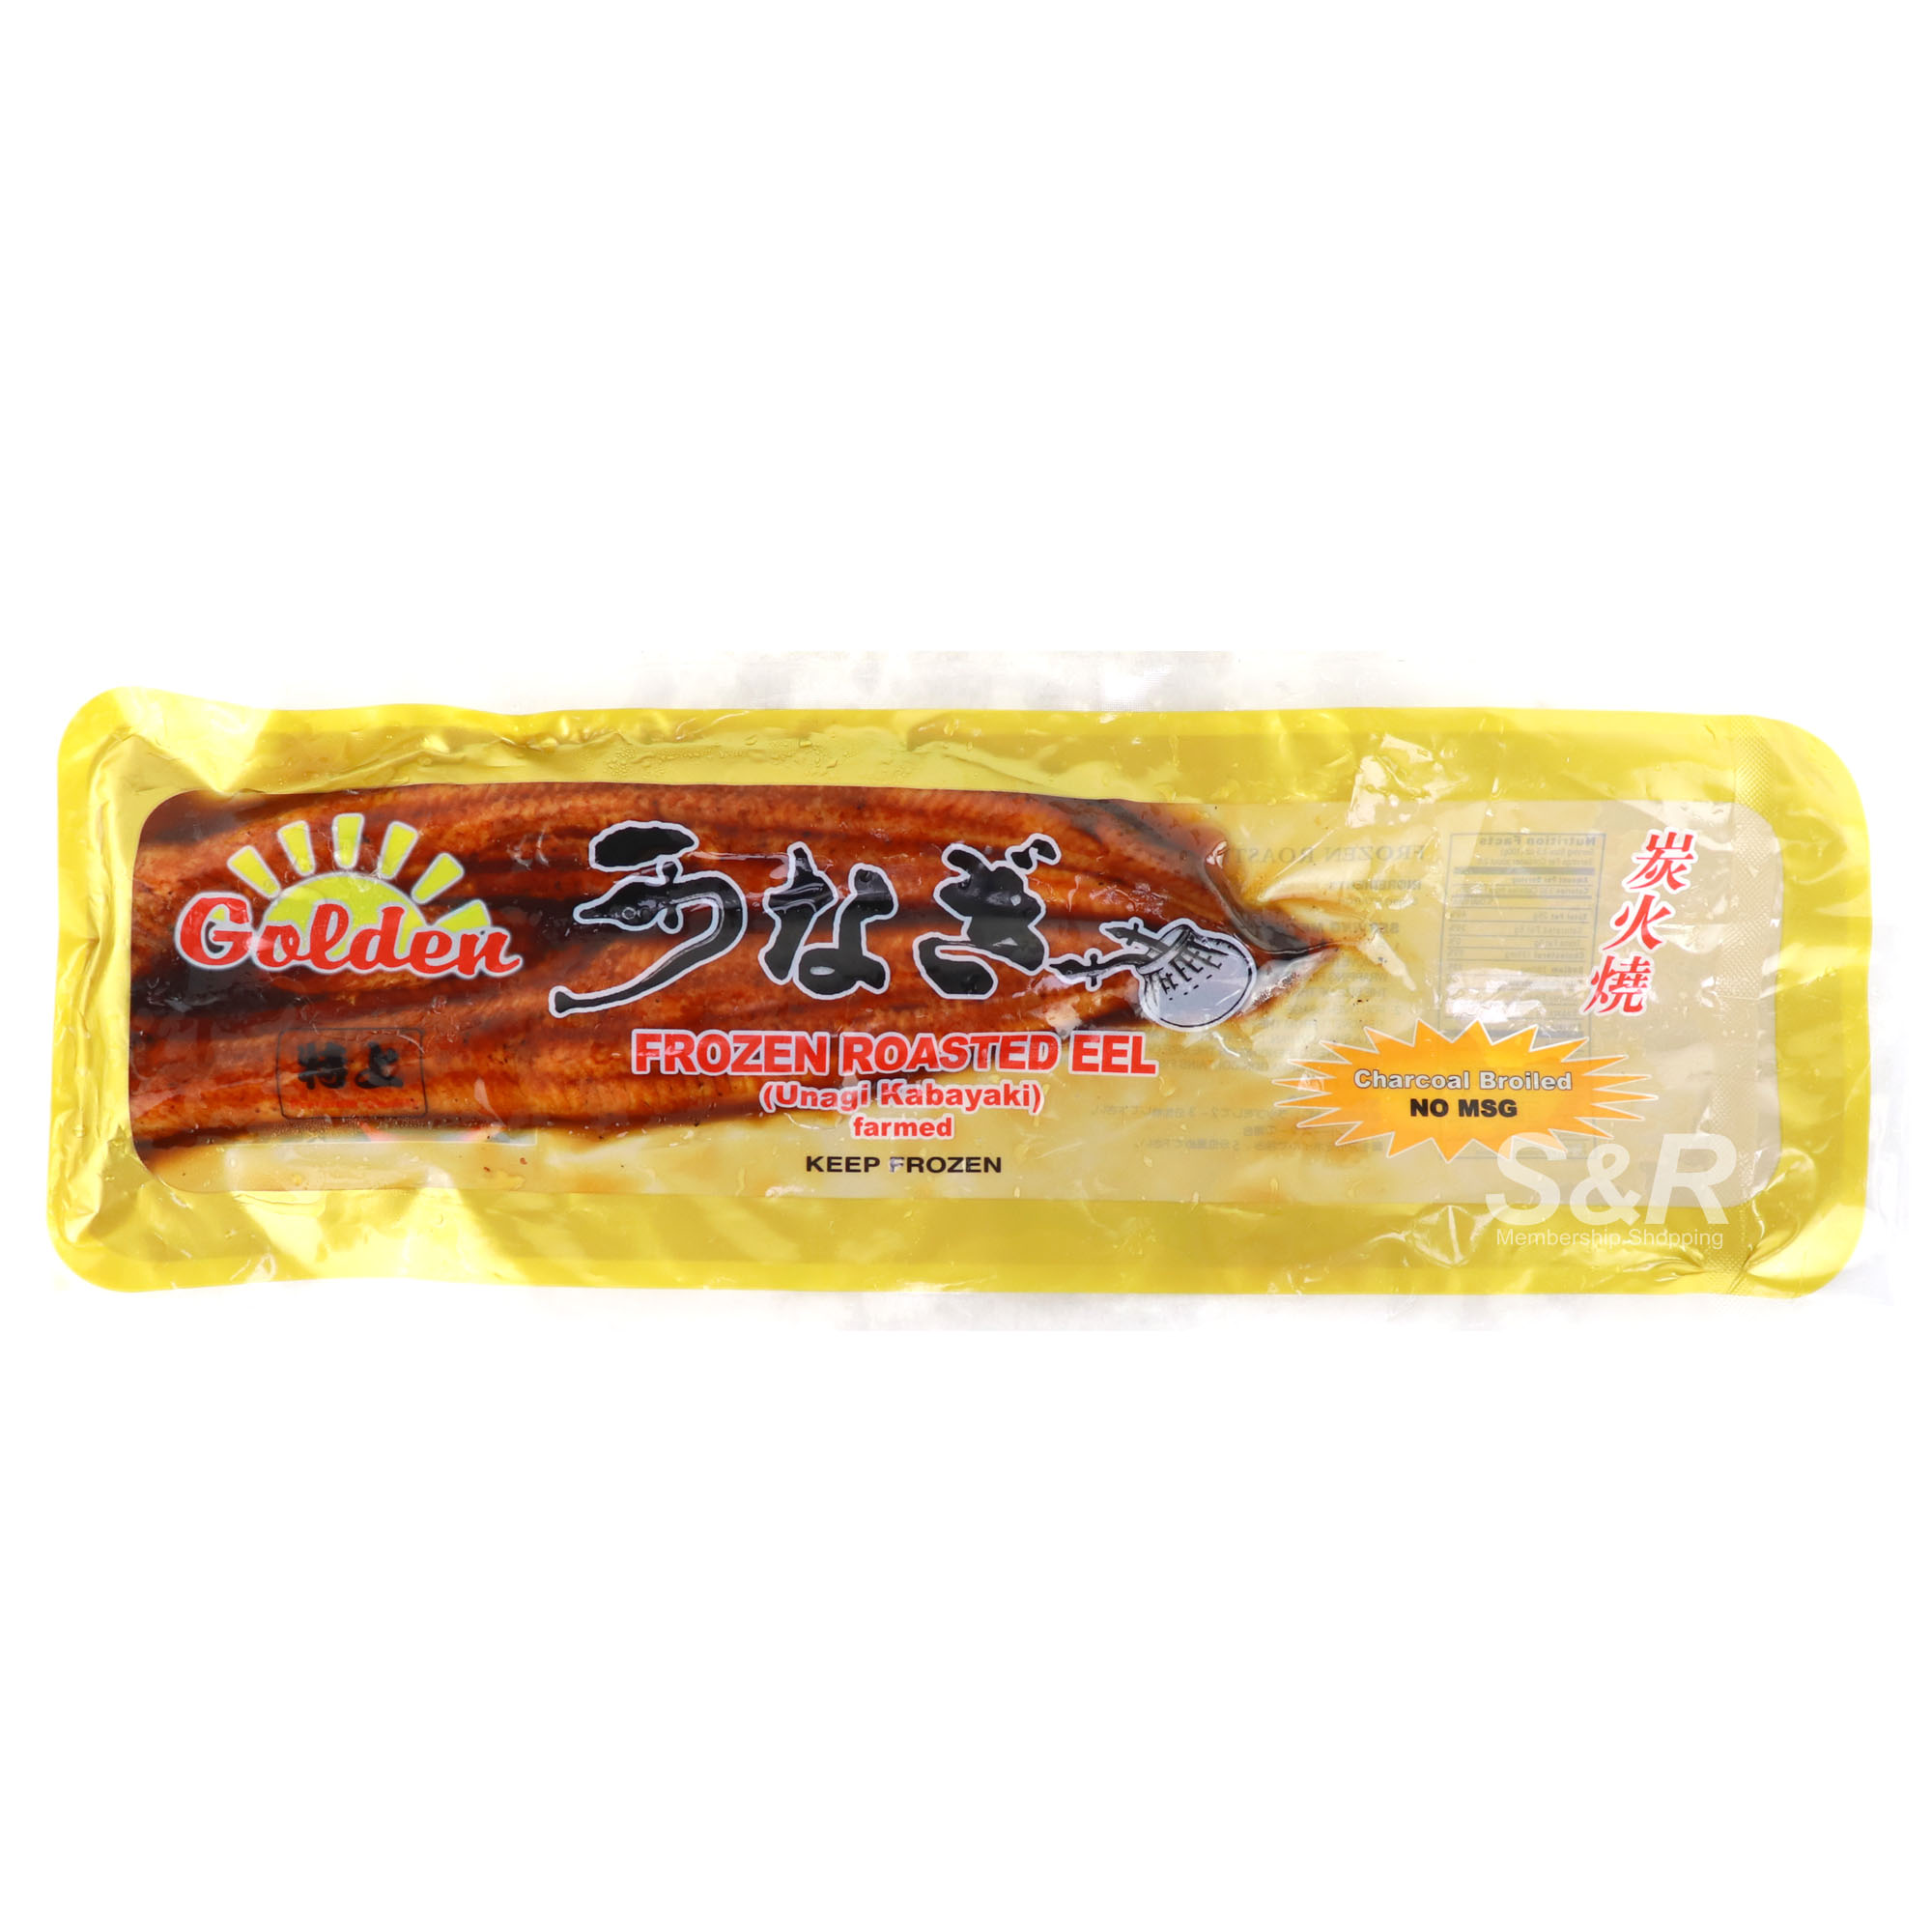 Golden Frozen Roasted Eel approx. 260-280g